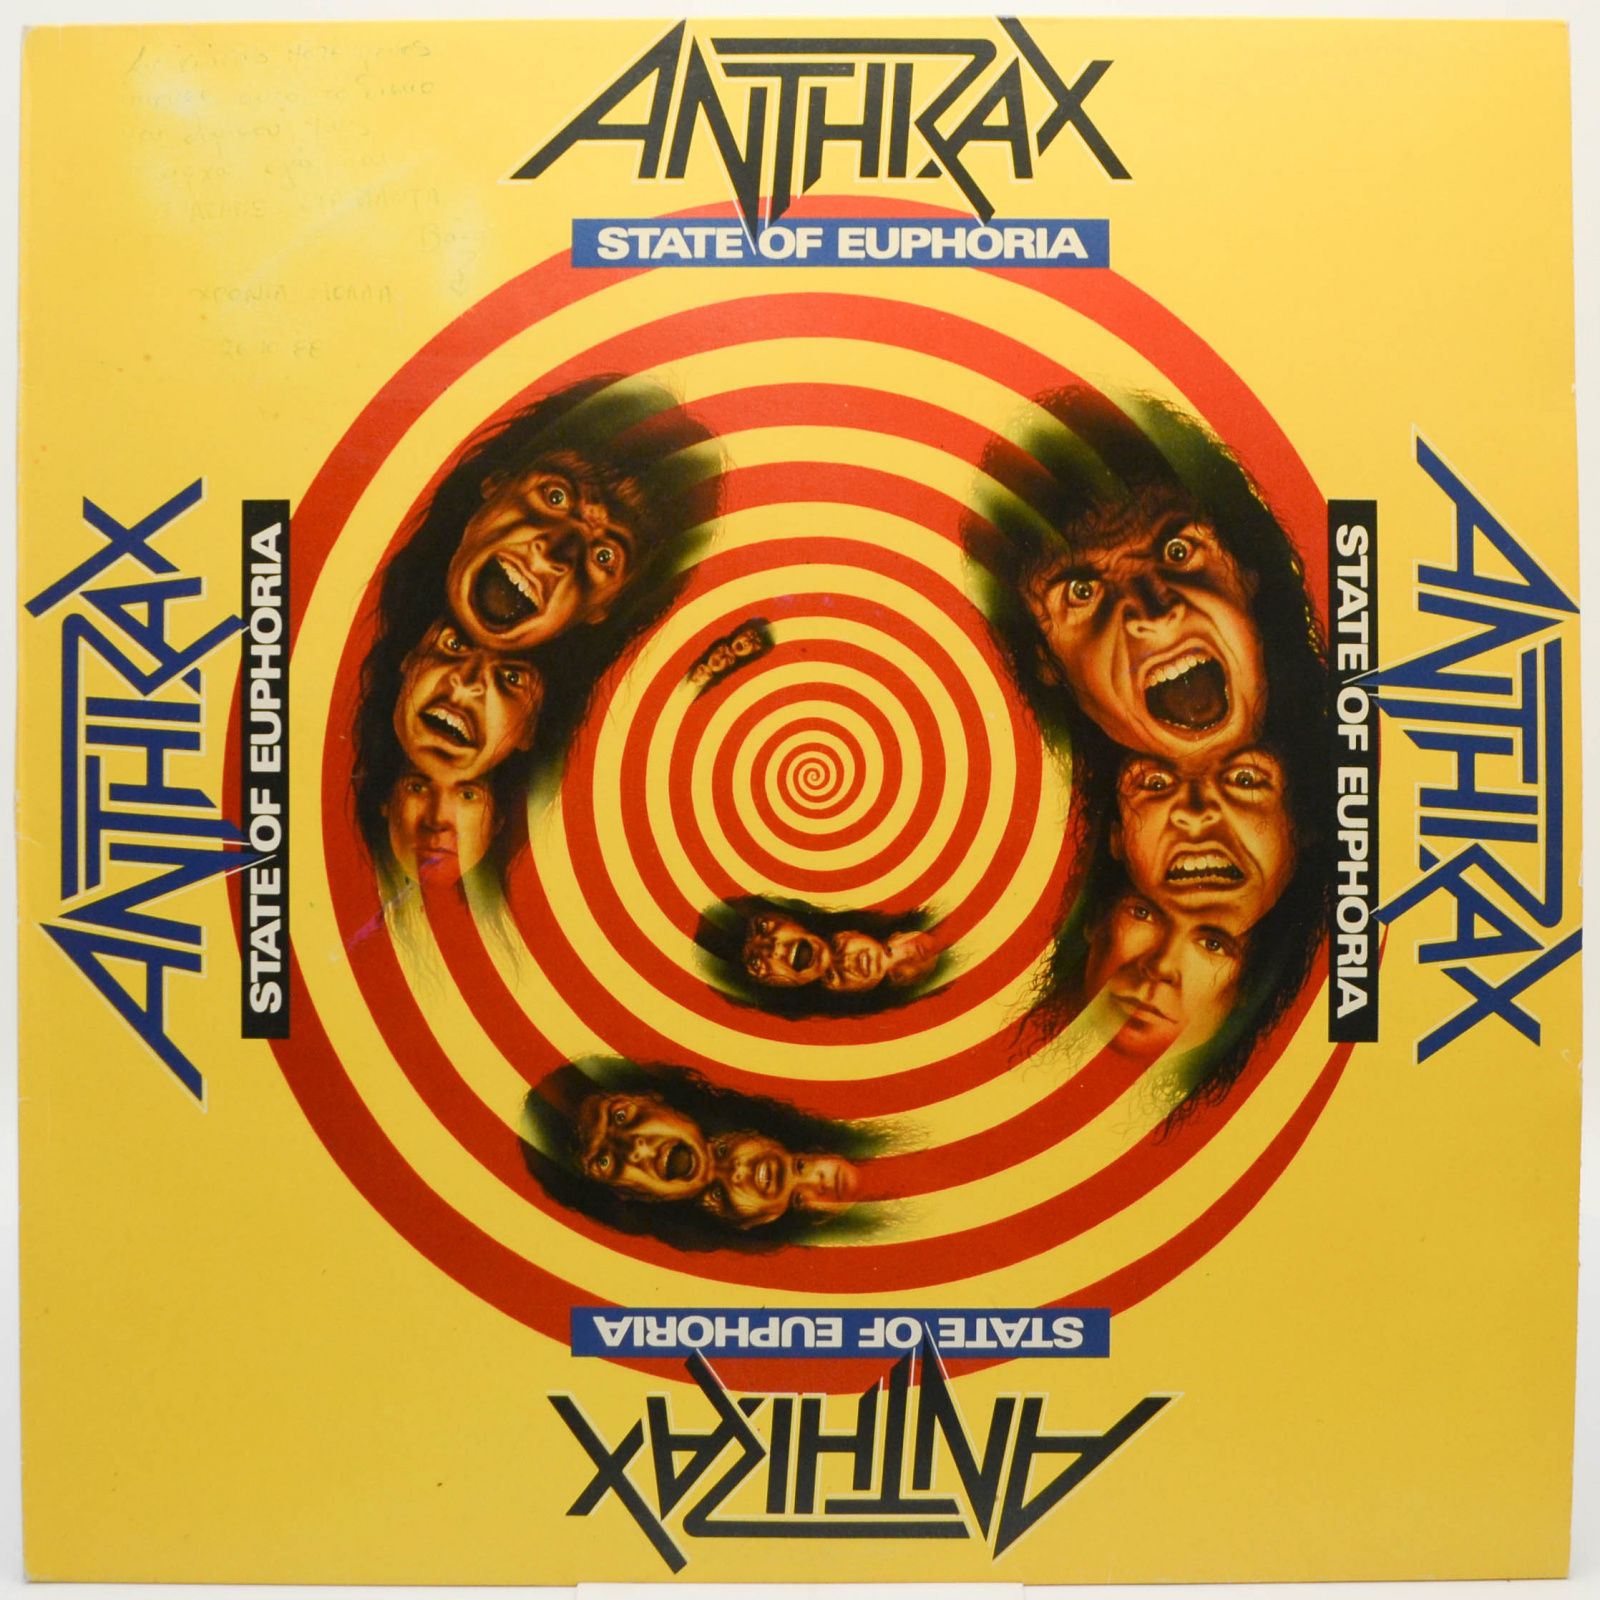 Anthrax — State Of Euphoria, 1988